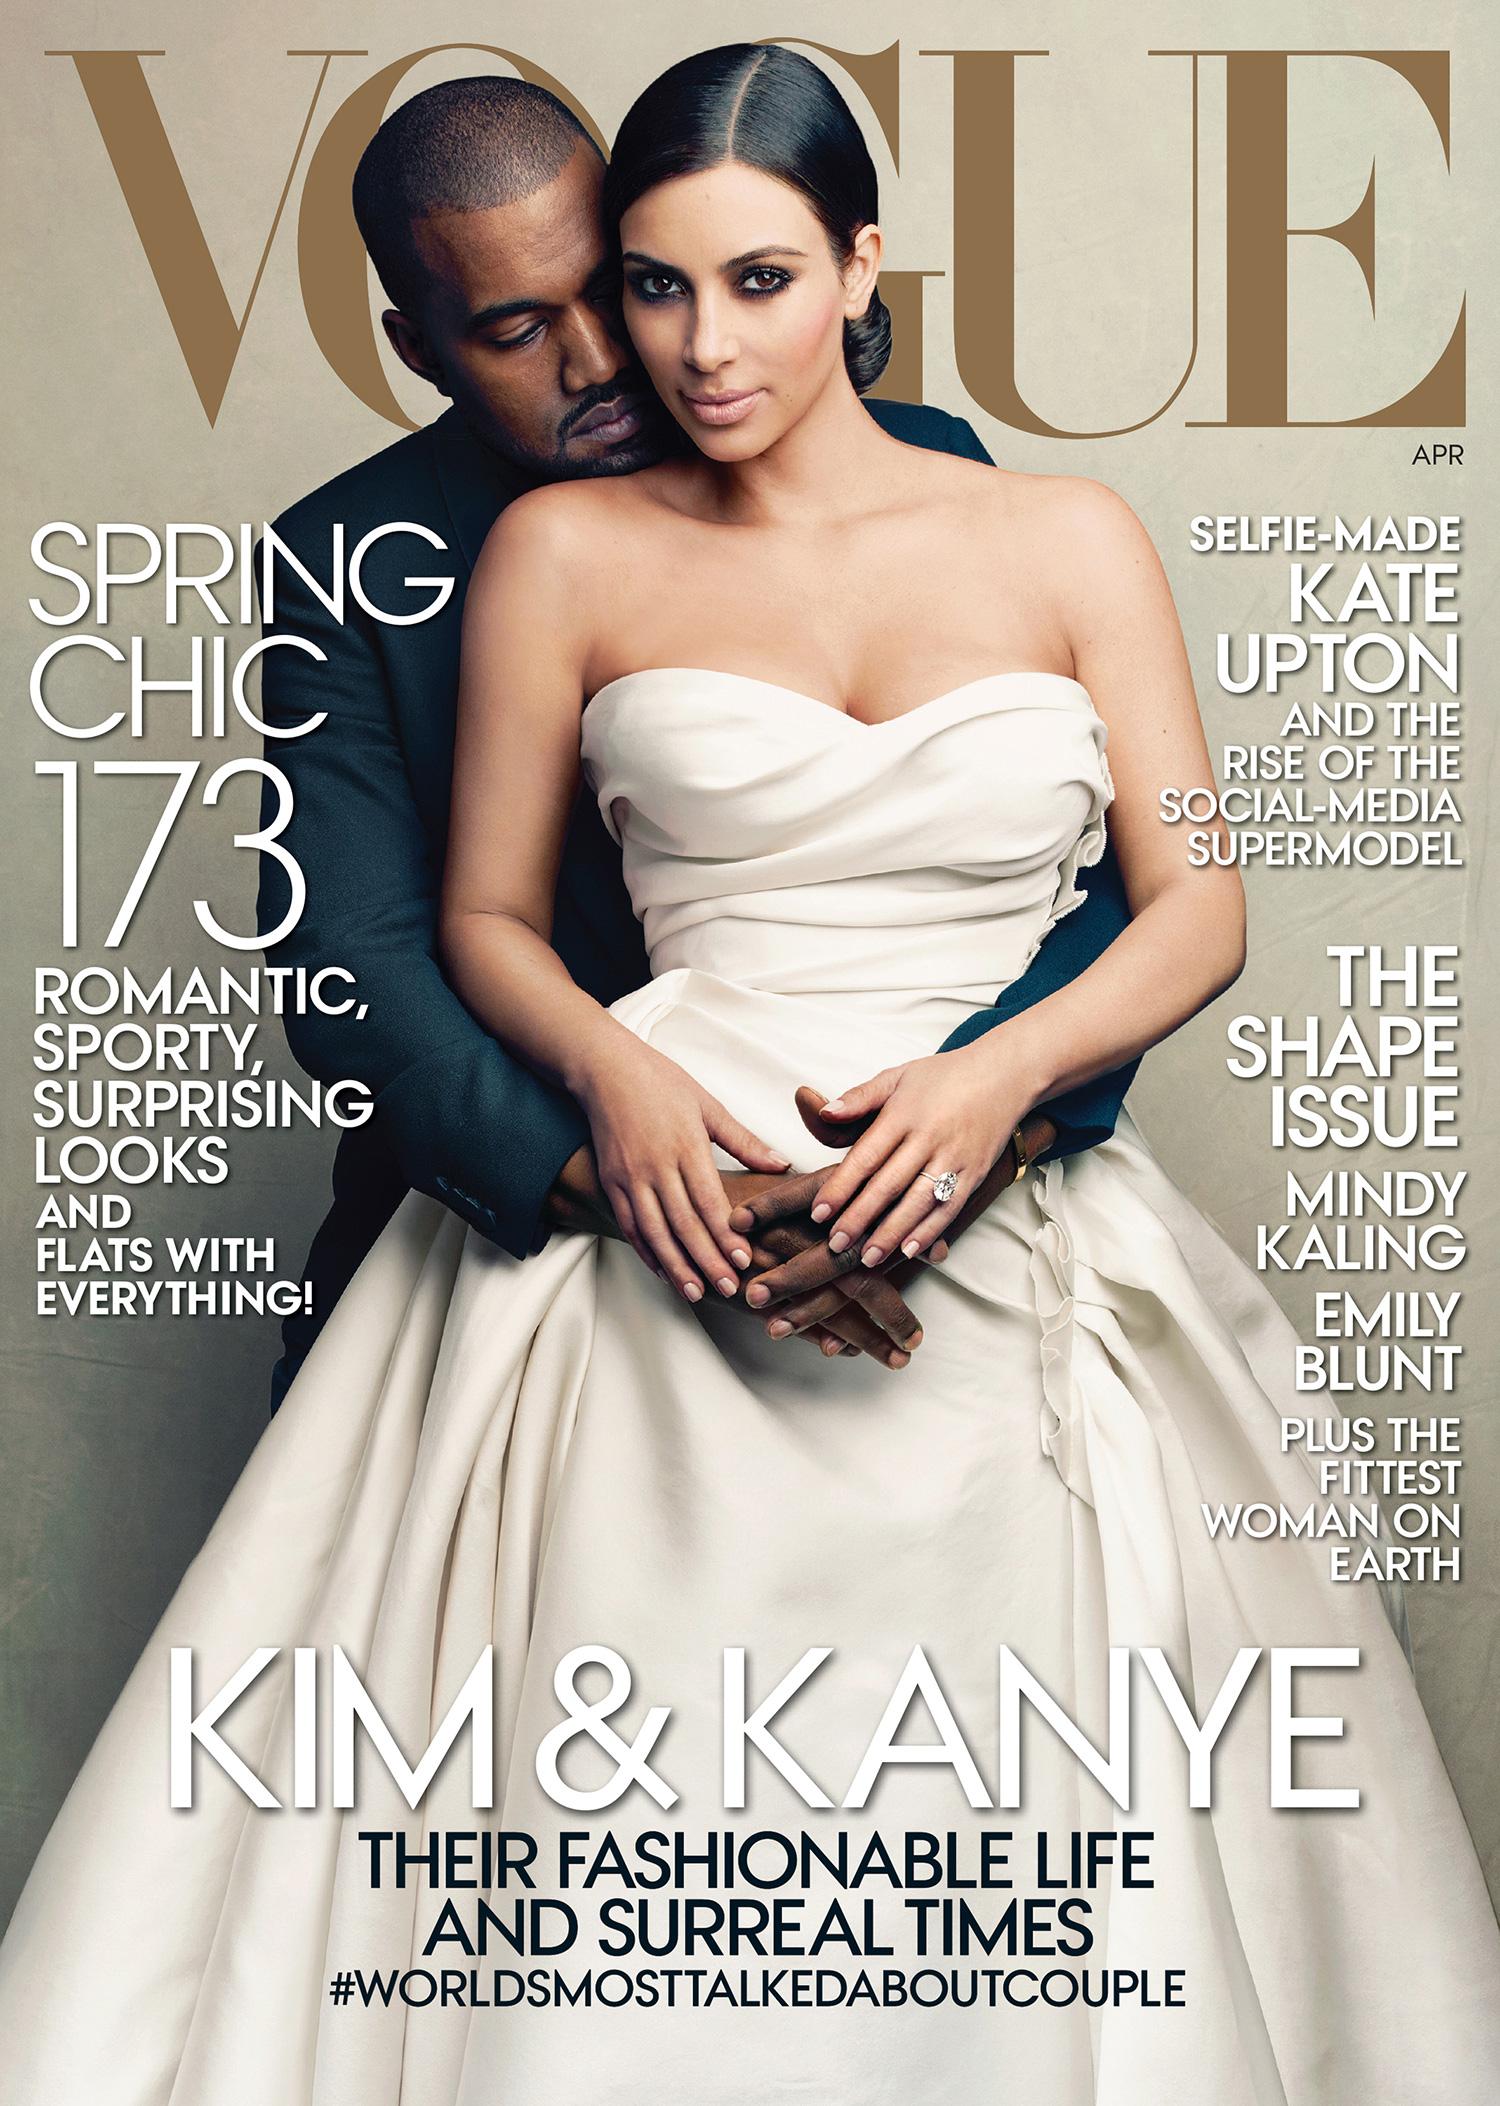 Kim och Kanye på omslaget av "Vogue”.